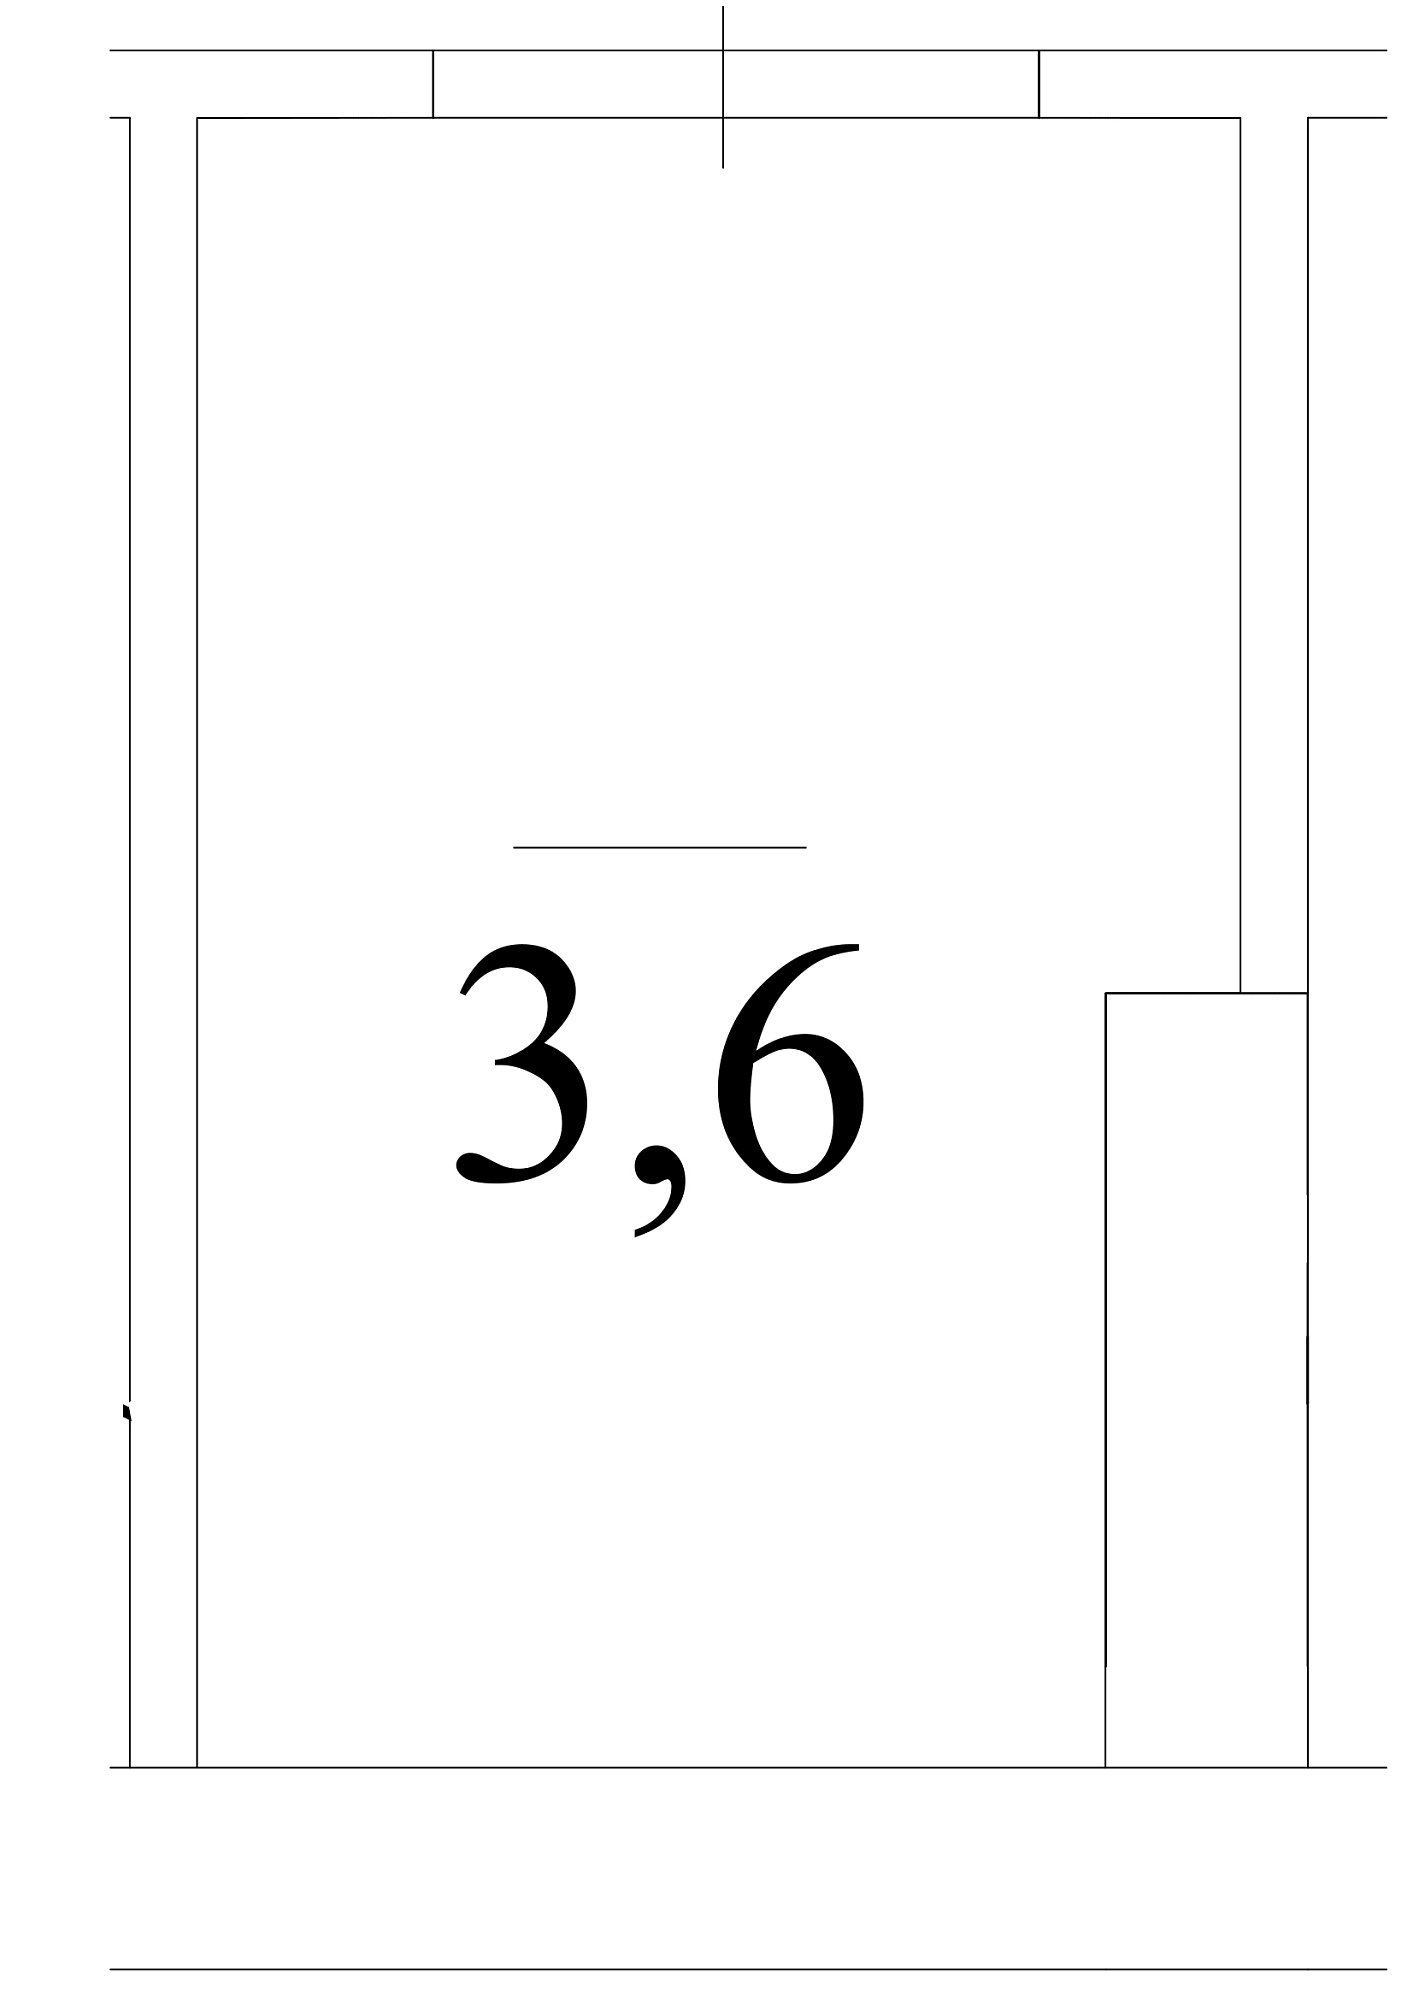 Planning Storeroom area 3.6m2, AB-13-м1/К0079.